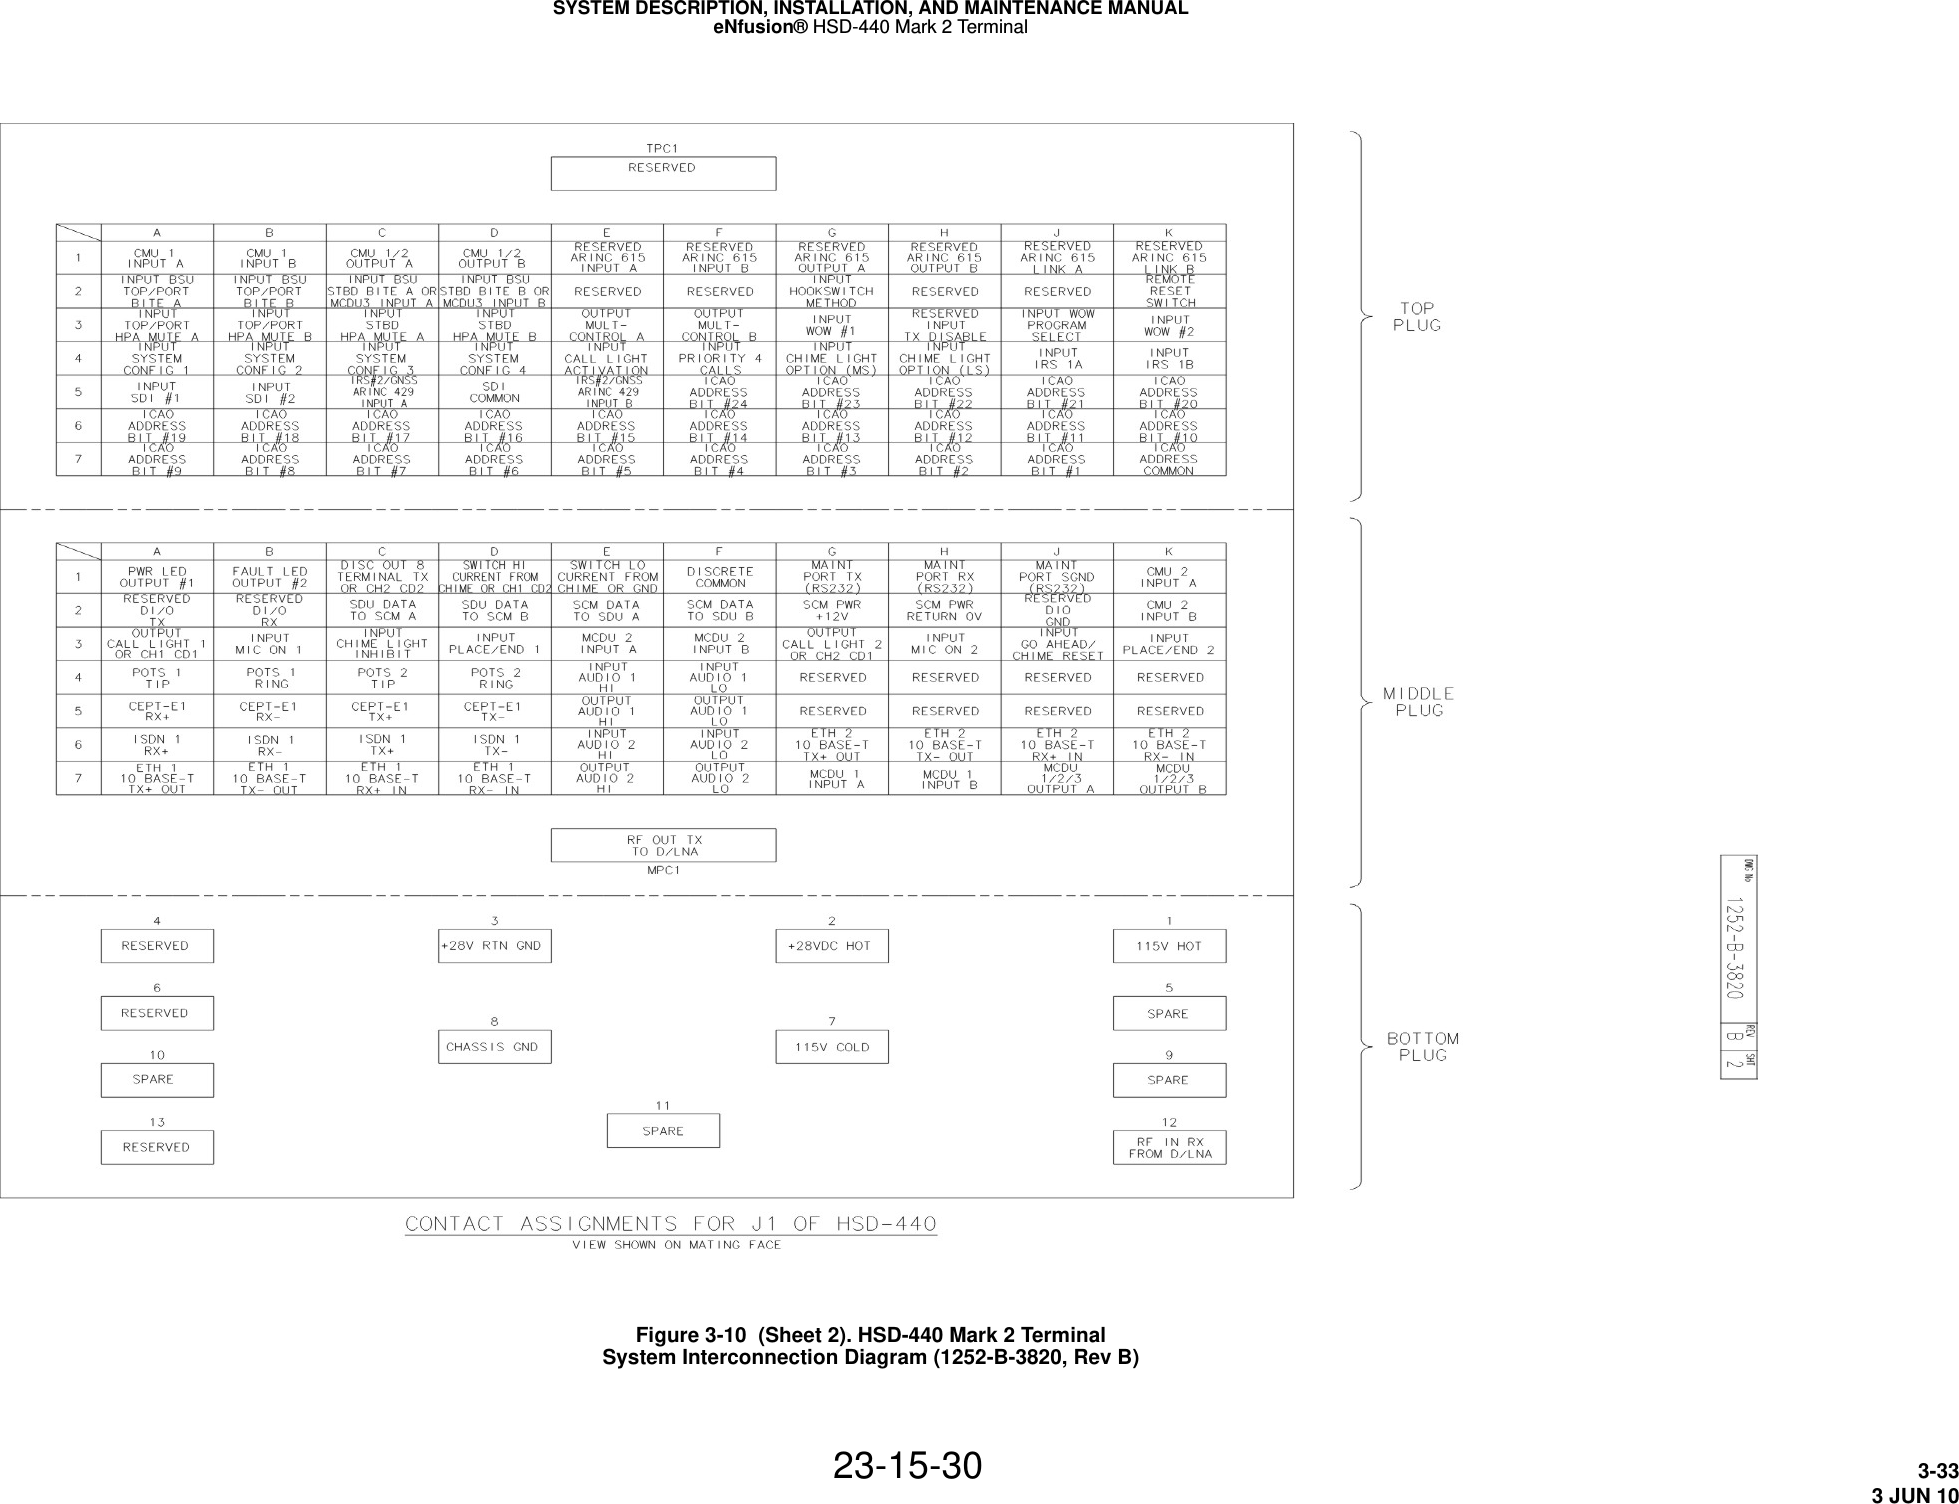 SYSTEM DESCRIPTION, INSTALLATION, AND MAINTENANCE MANUALeNfusion® HSD-440 Mark 2 Terminal23-15-30 3-333 JUN 10Figure 3-10  (Sheet 2). HSD-440 Mark 2 TerminalSystem Interconnection Diagram (1252-B-3820, Rev B)